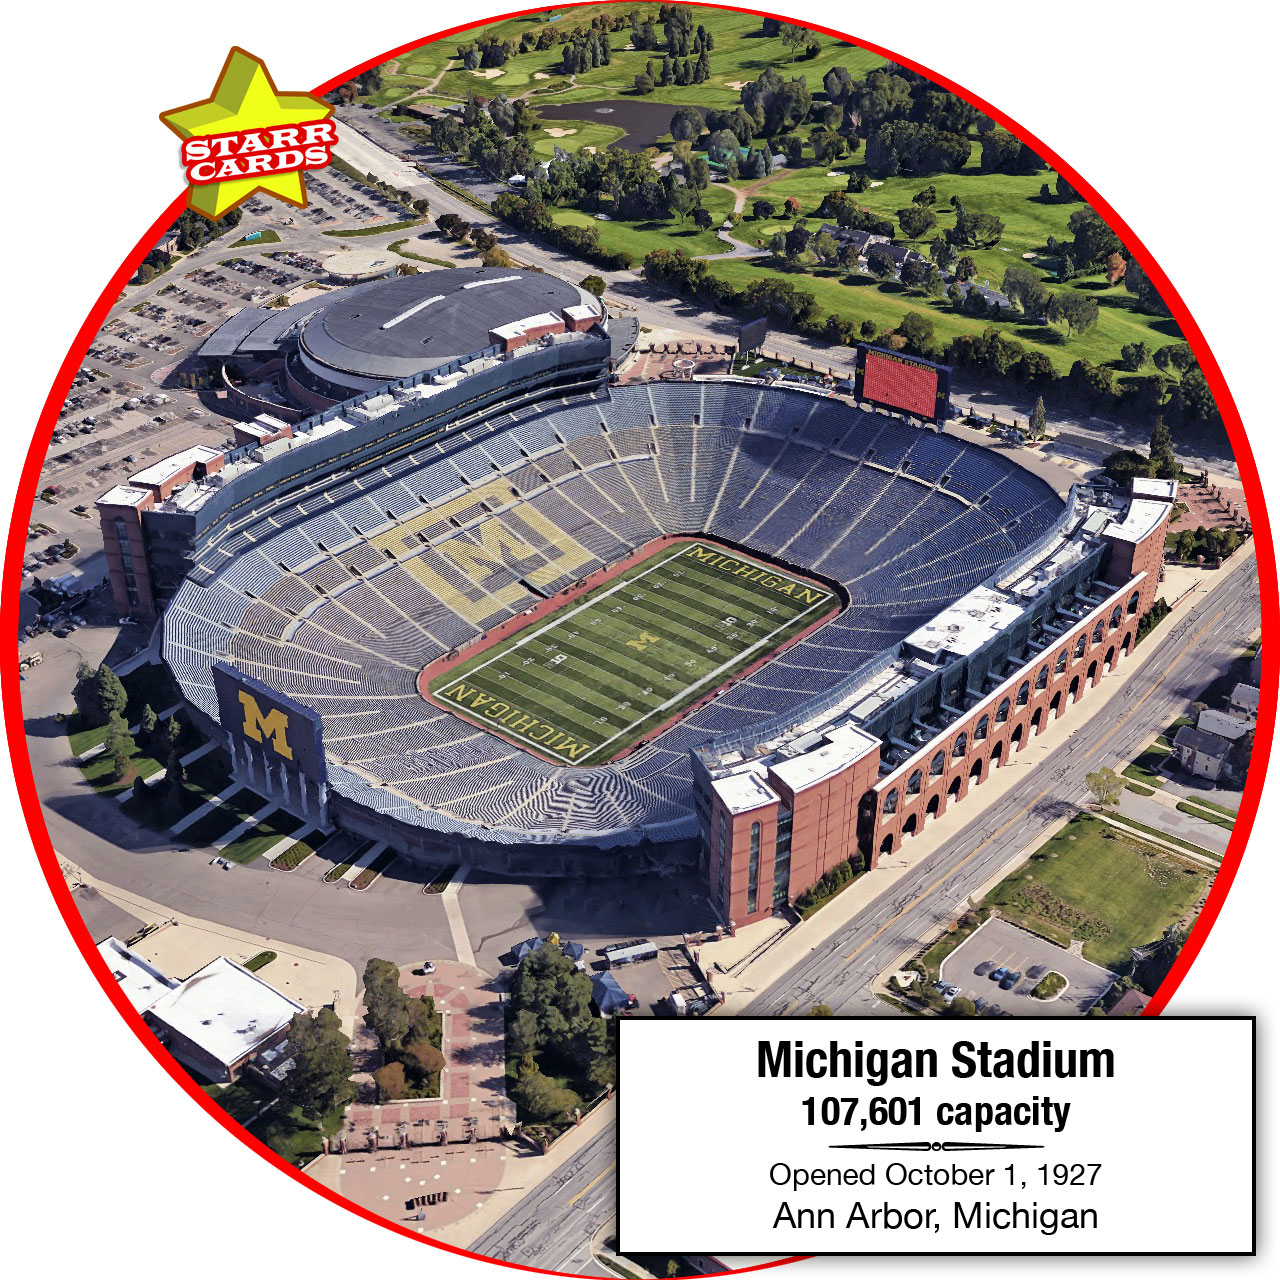 Michigan Stadium, Ann Arbor, Michigan: Home to the Michigan Wolverines